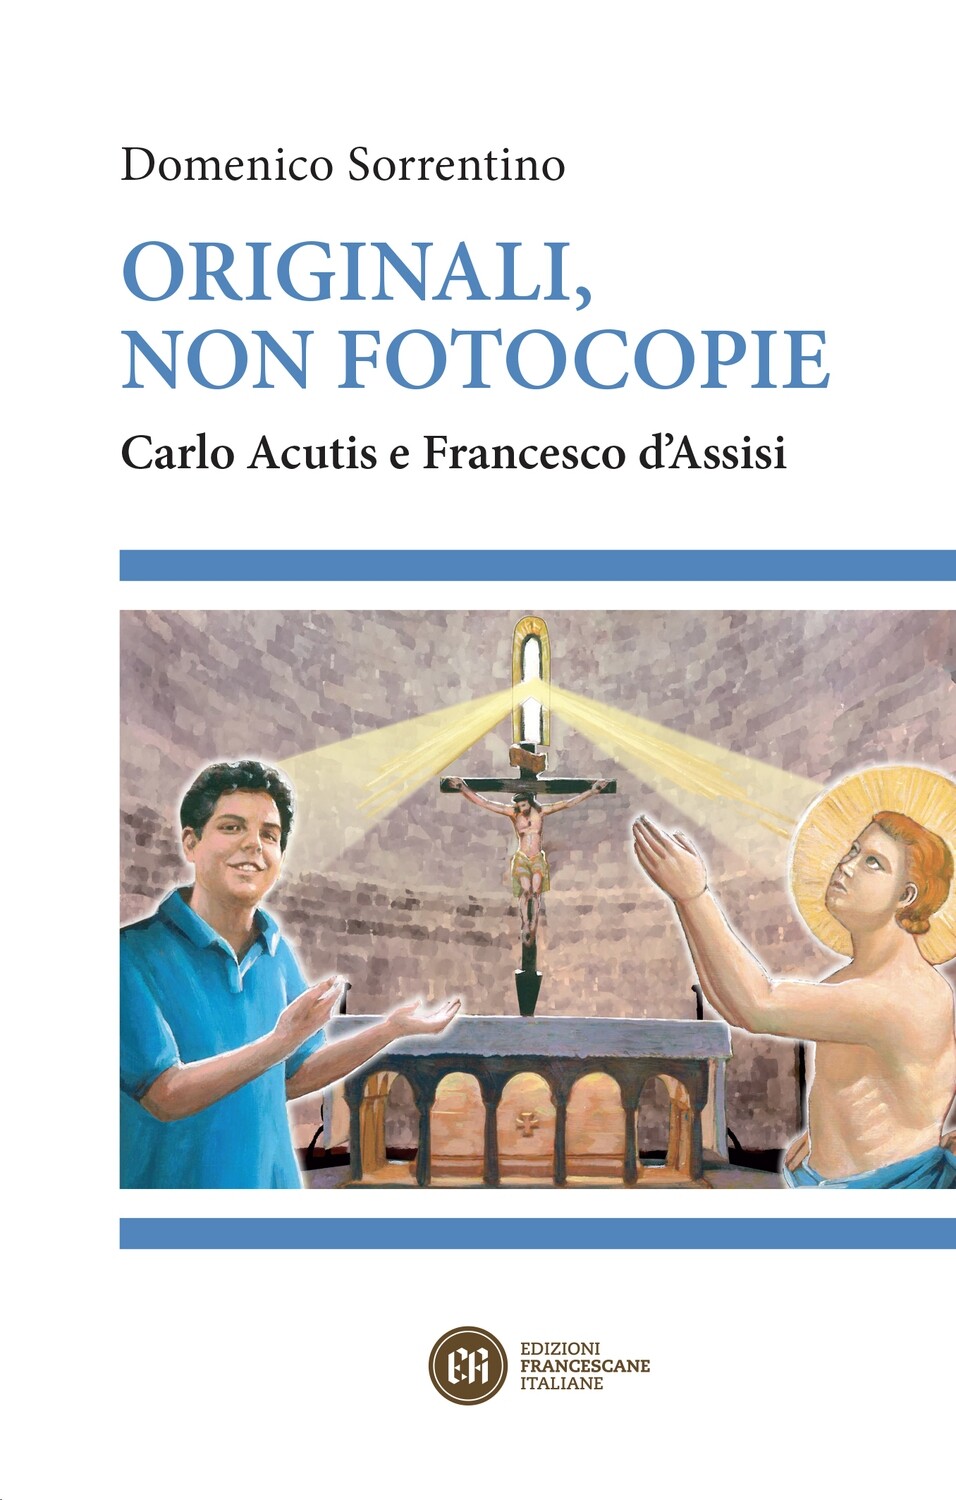 Originali, non fotocopie - Carlo Acutis e Francesco d'Assisi